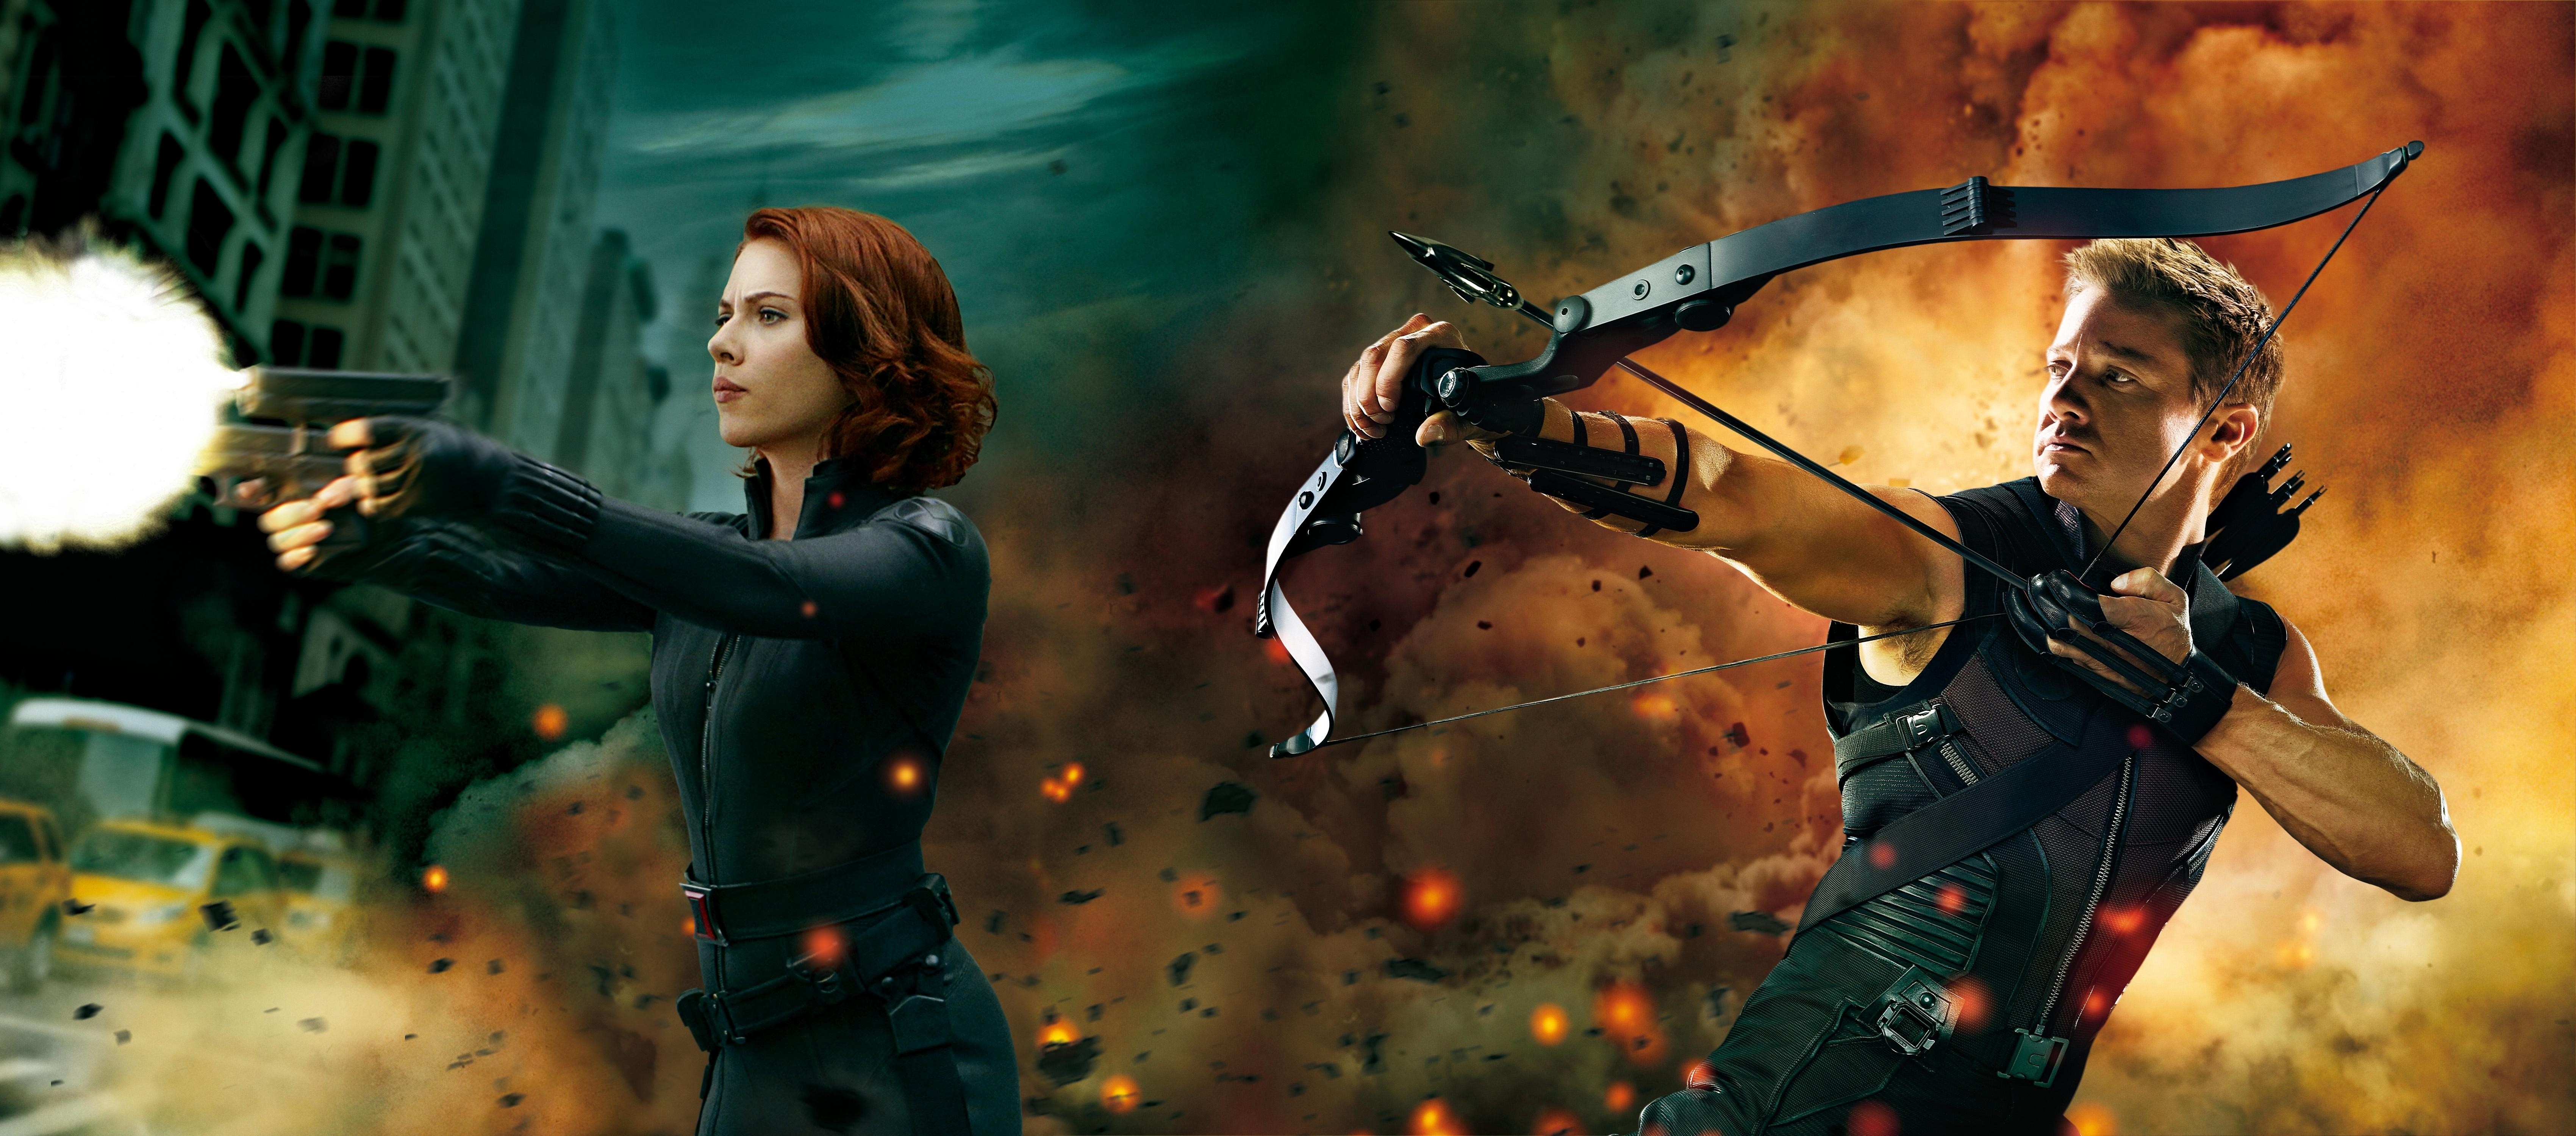 The Avengers - Black Widow and Hawkeye by HarleyQuinn645 on DeviantArt